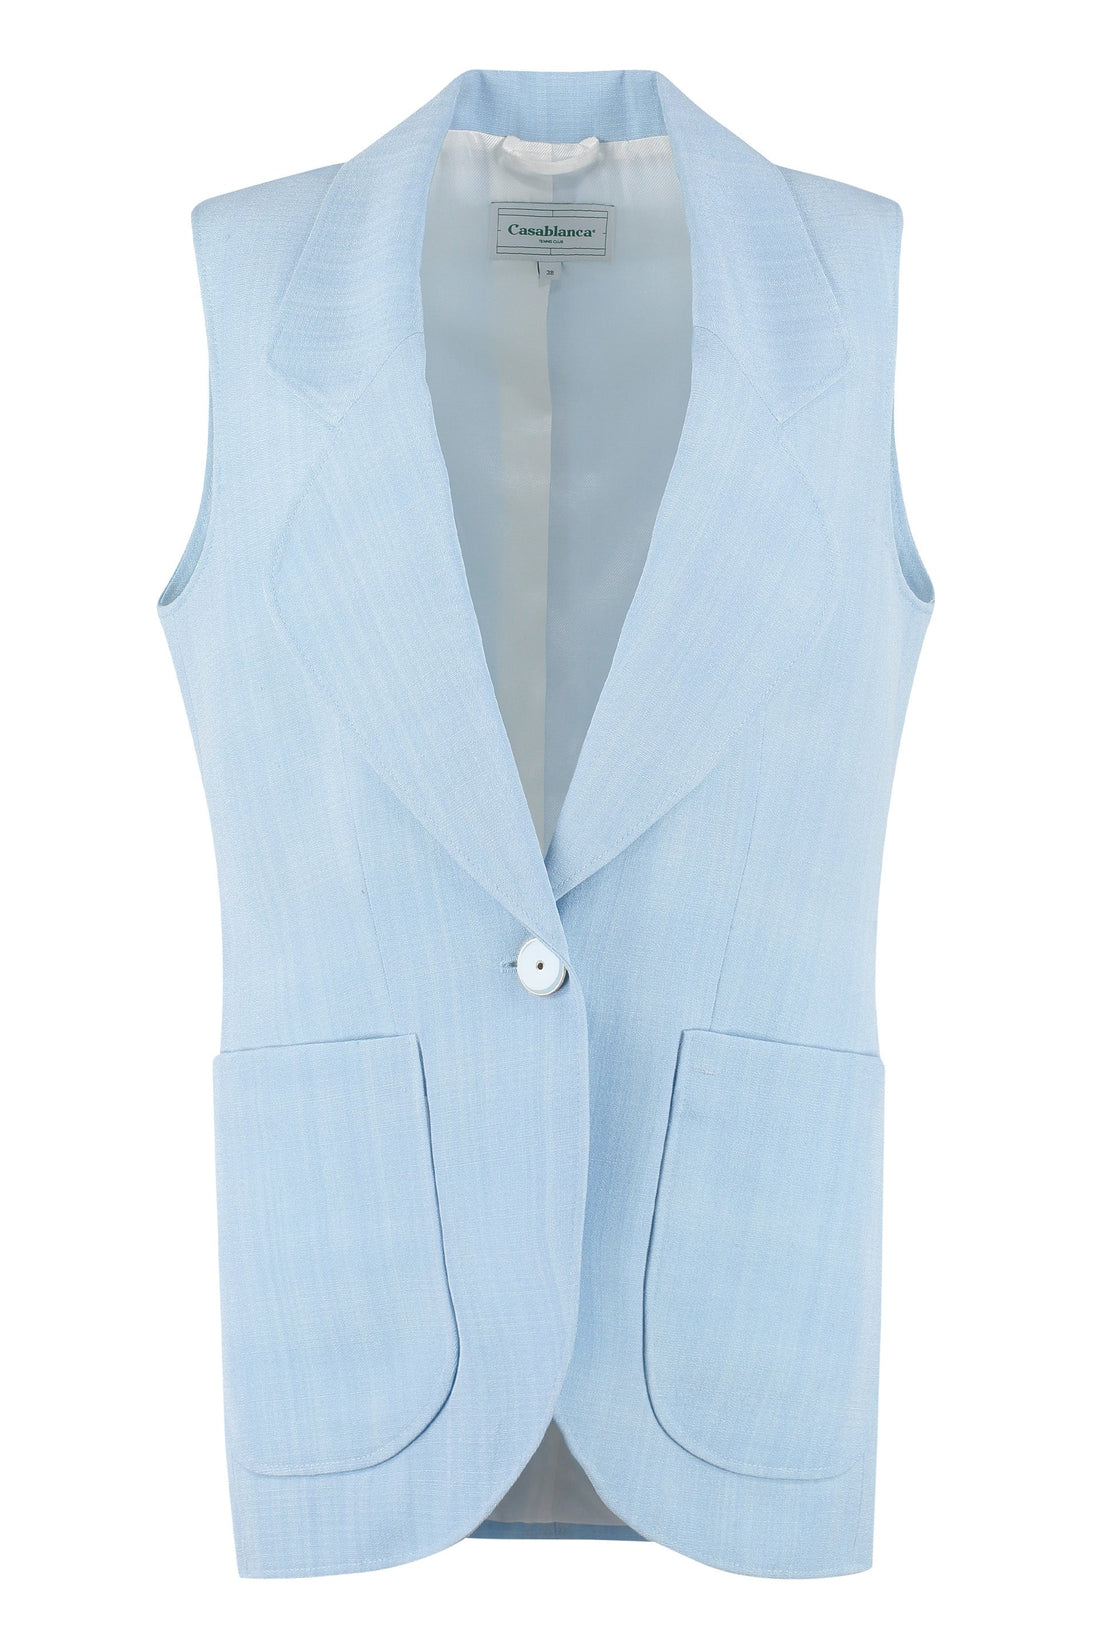 Casablanca-OUTLET-SALE-Single-breasted vest-ARCHIVIST